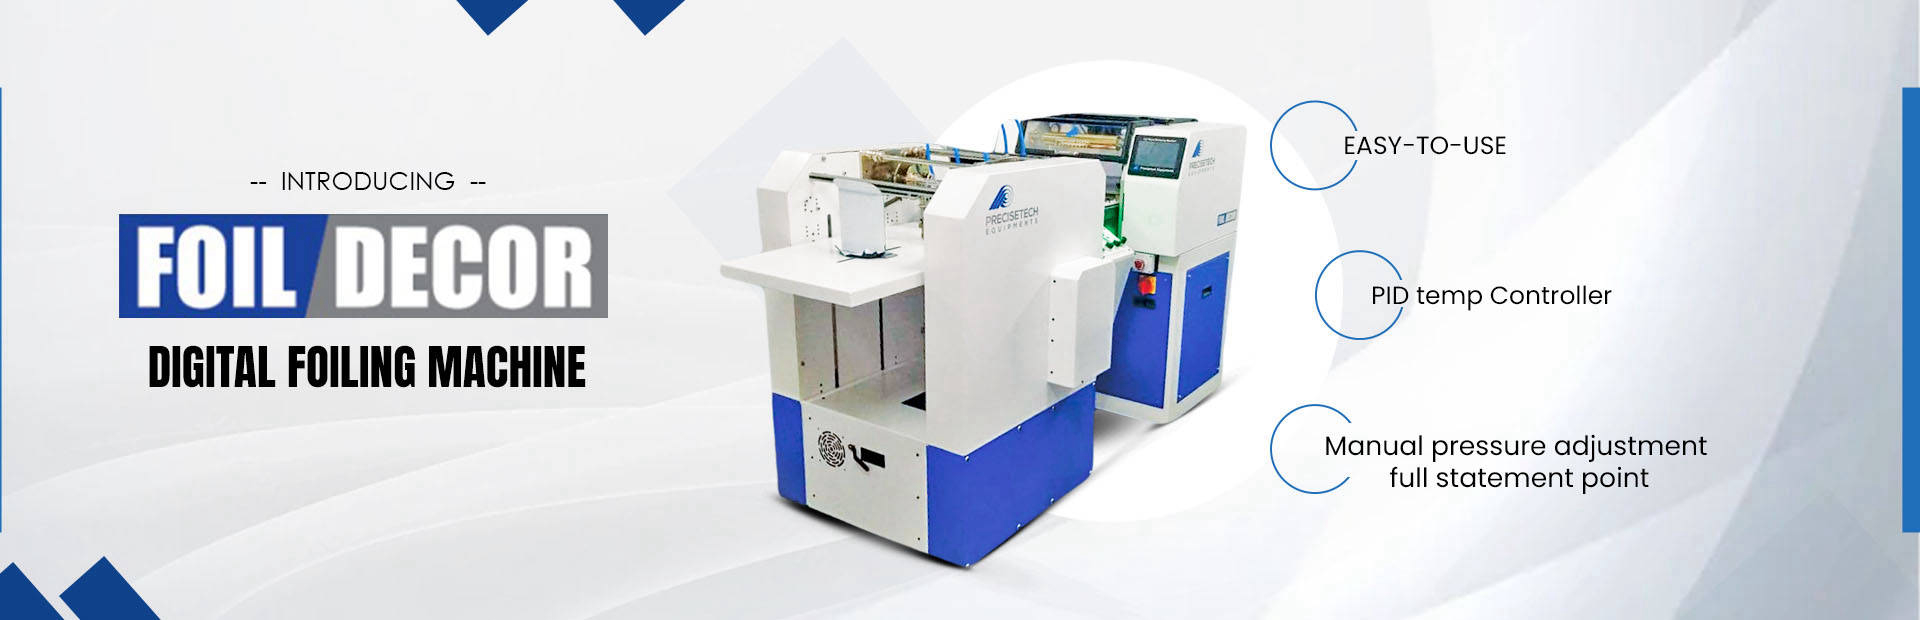 Foil Decor - A Digital Foiling Machine by Precisetech Equipments